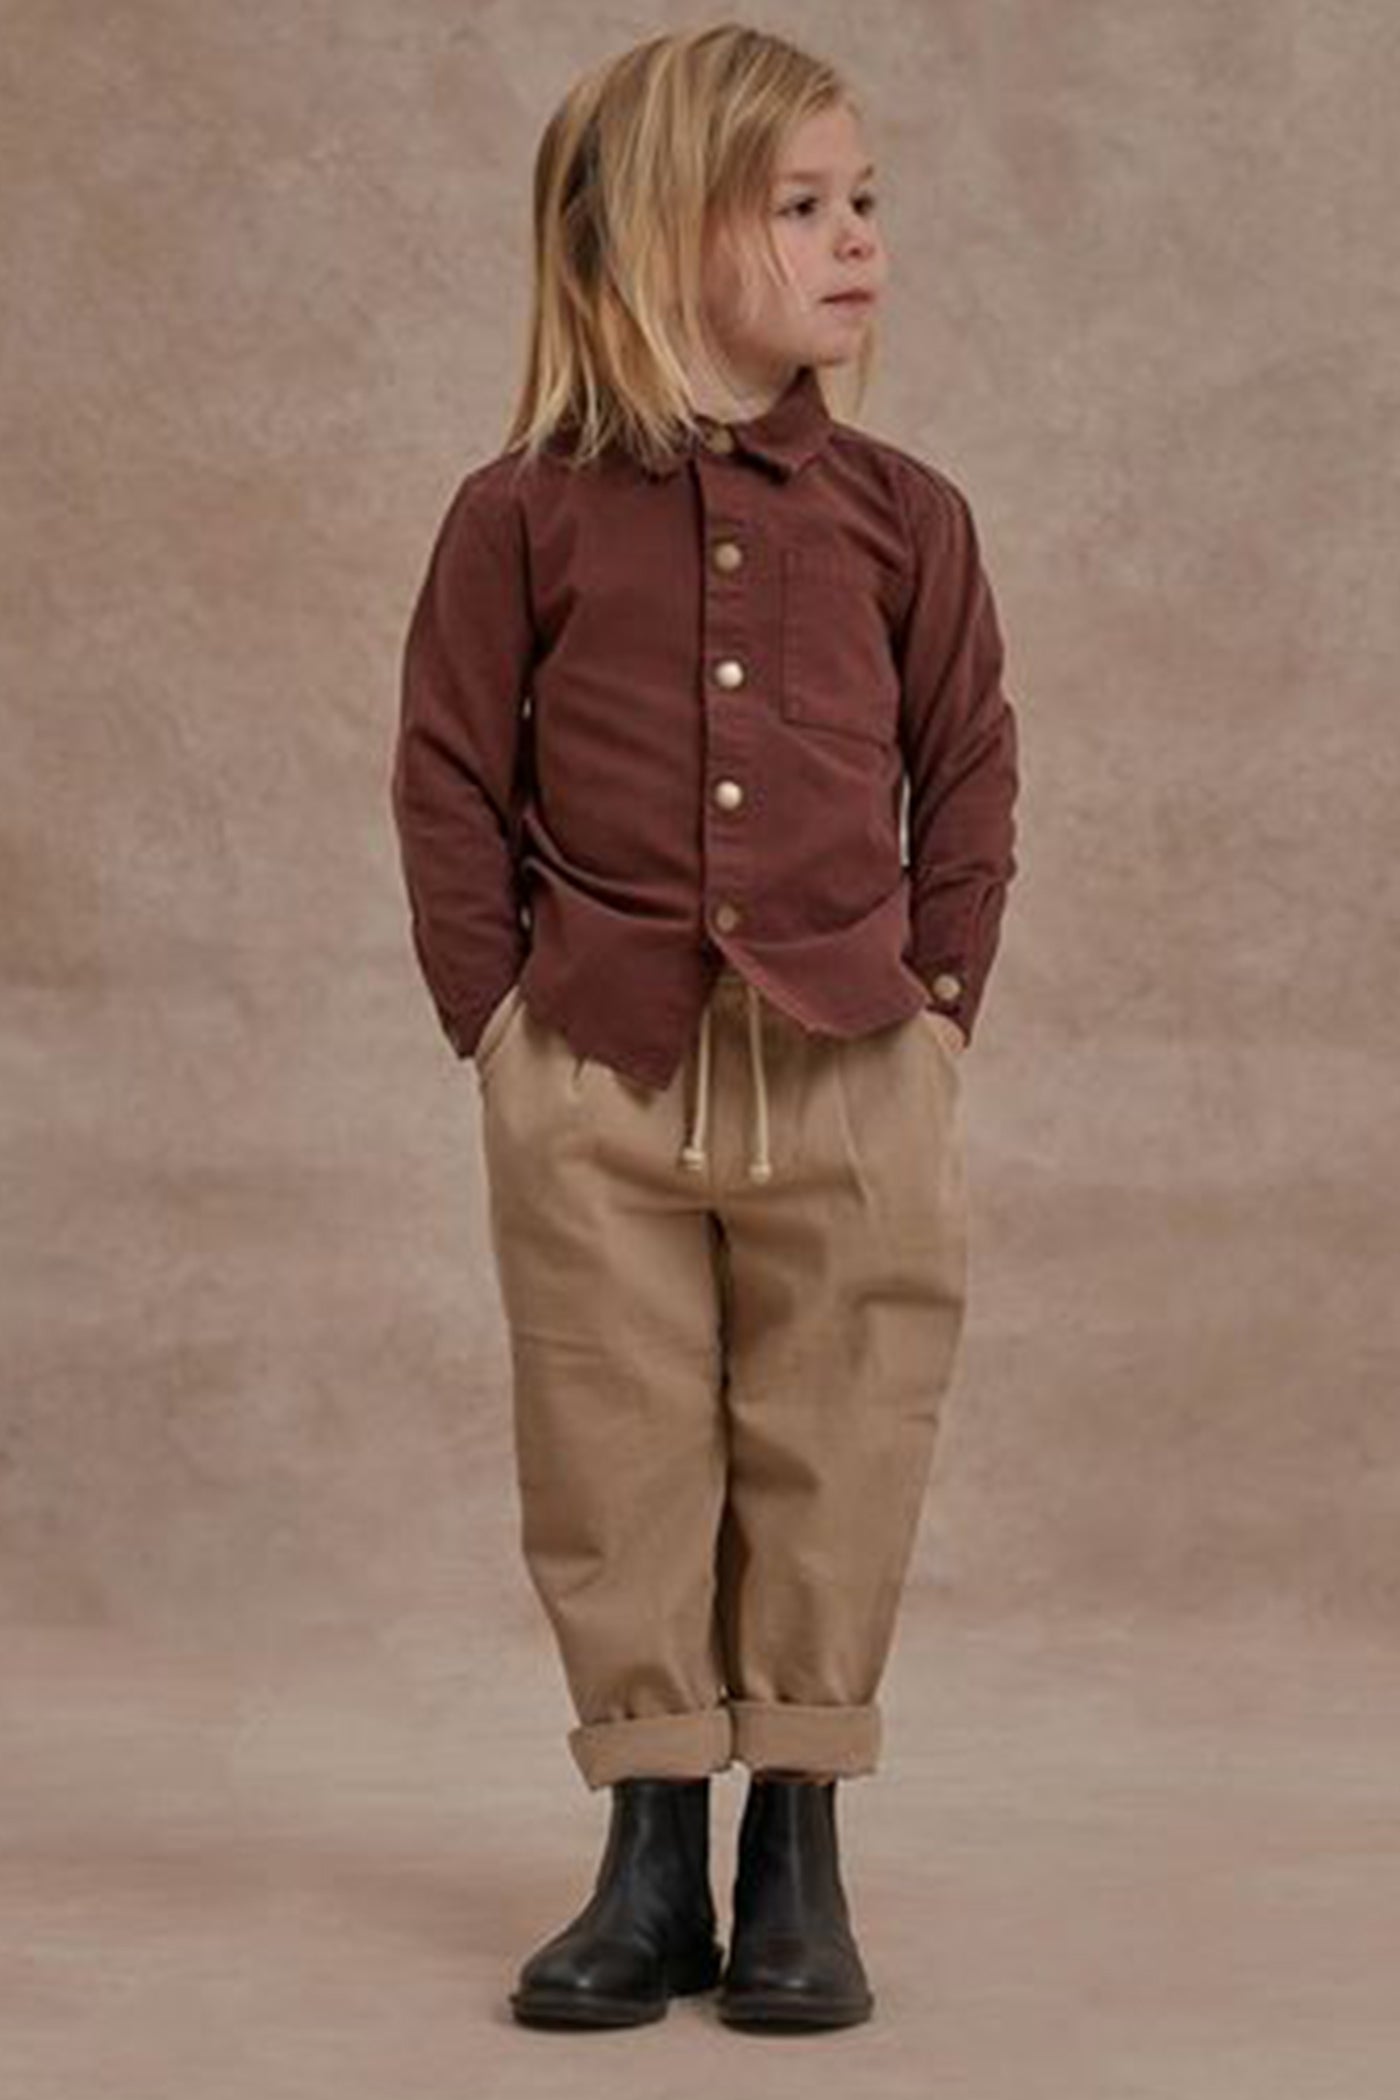 Long Sleeve Collared Kids Shirt by Rylee &amp; Cru